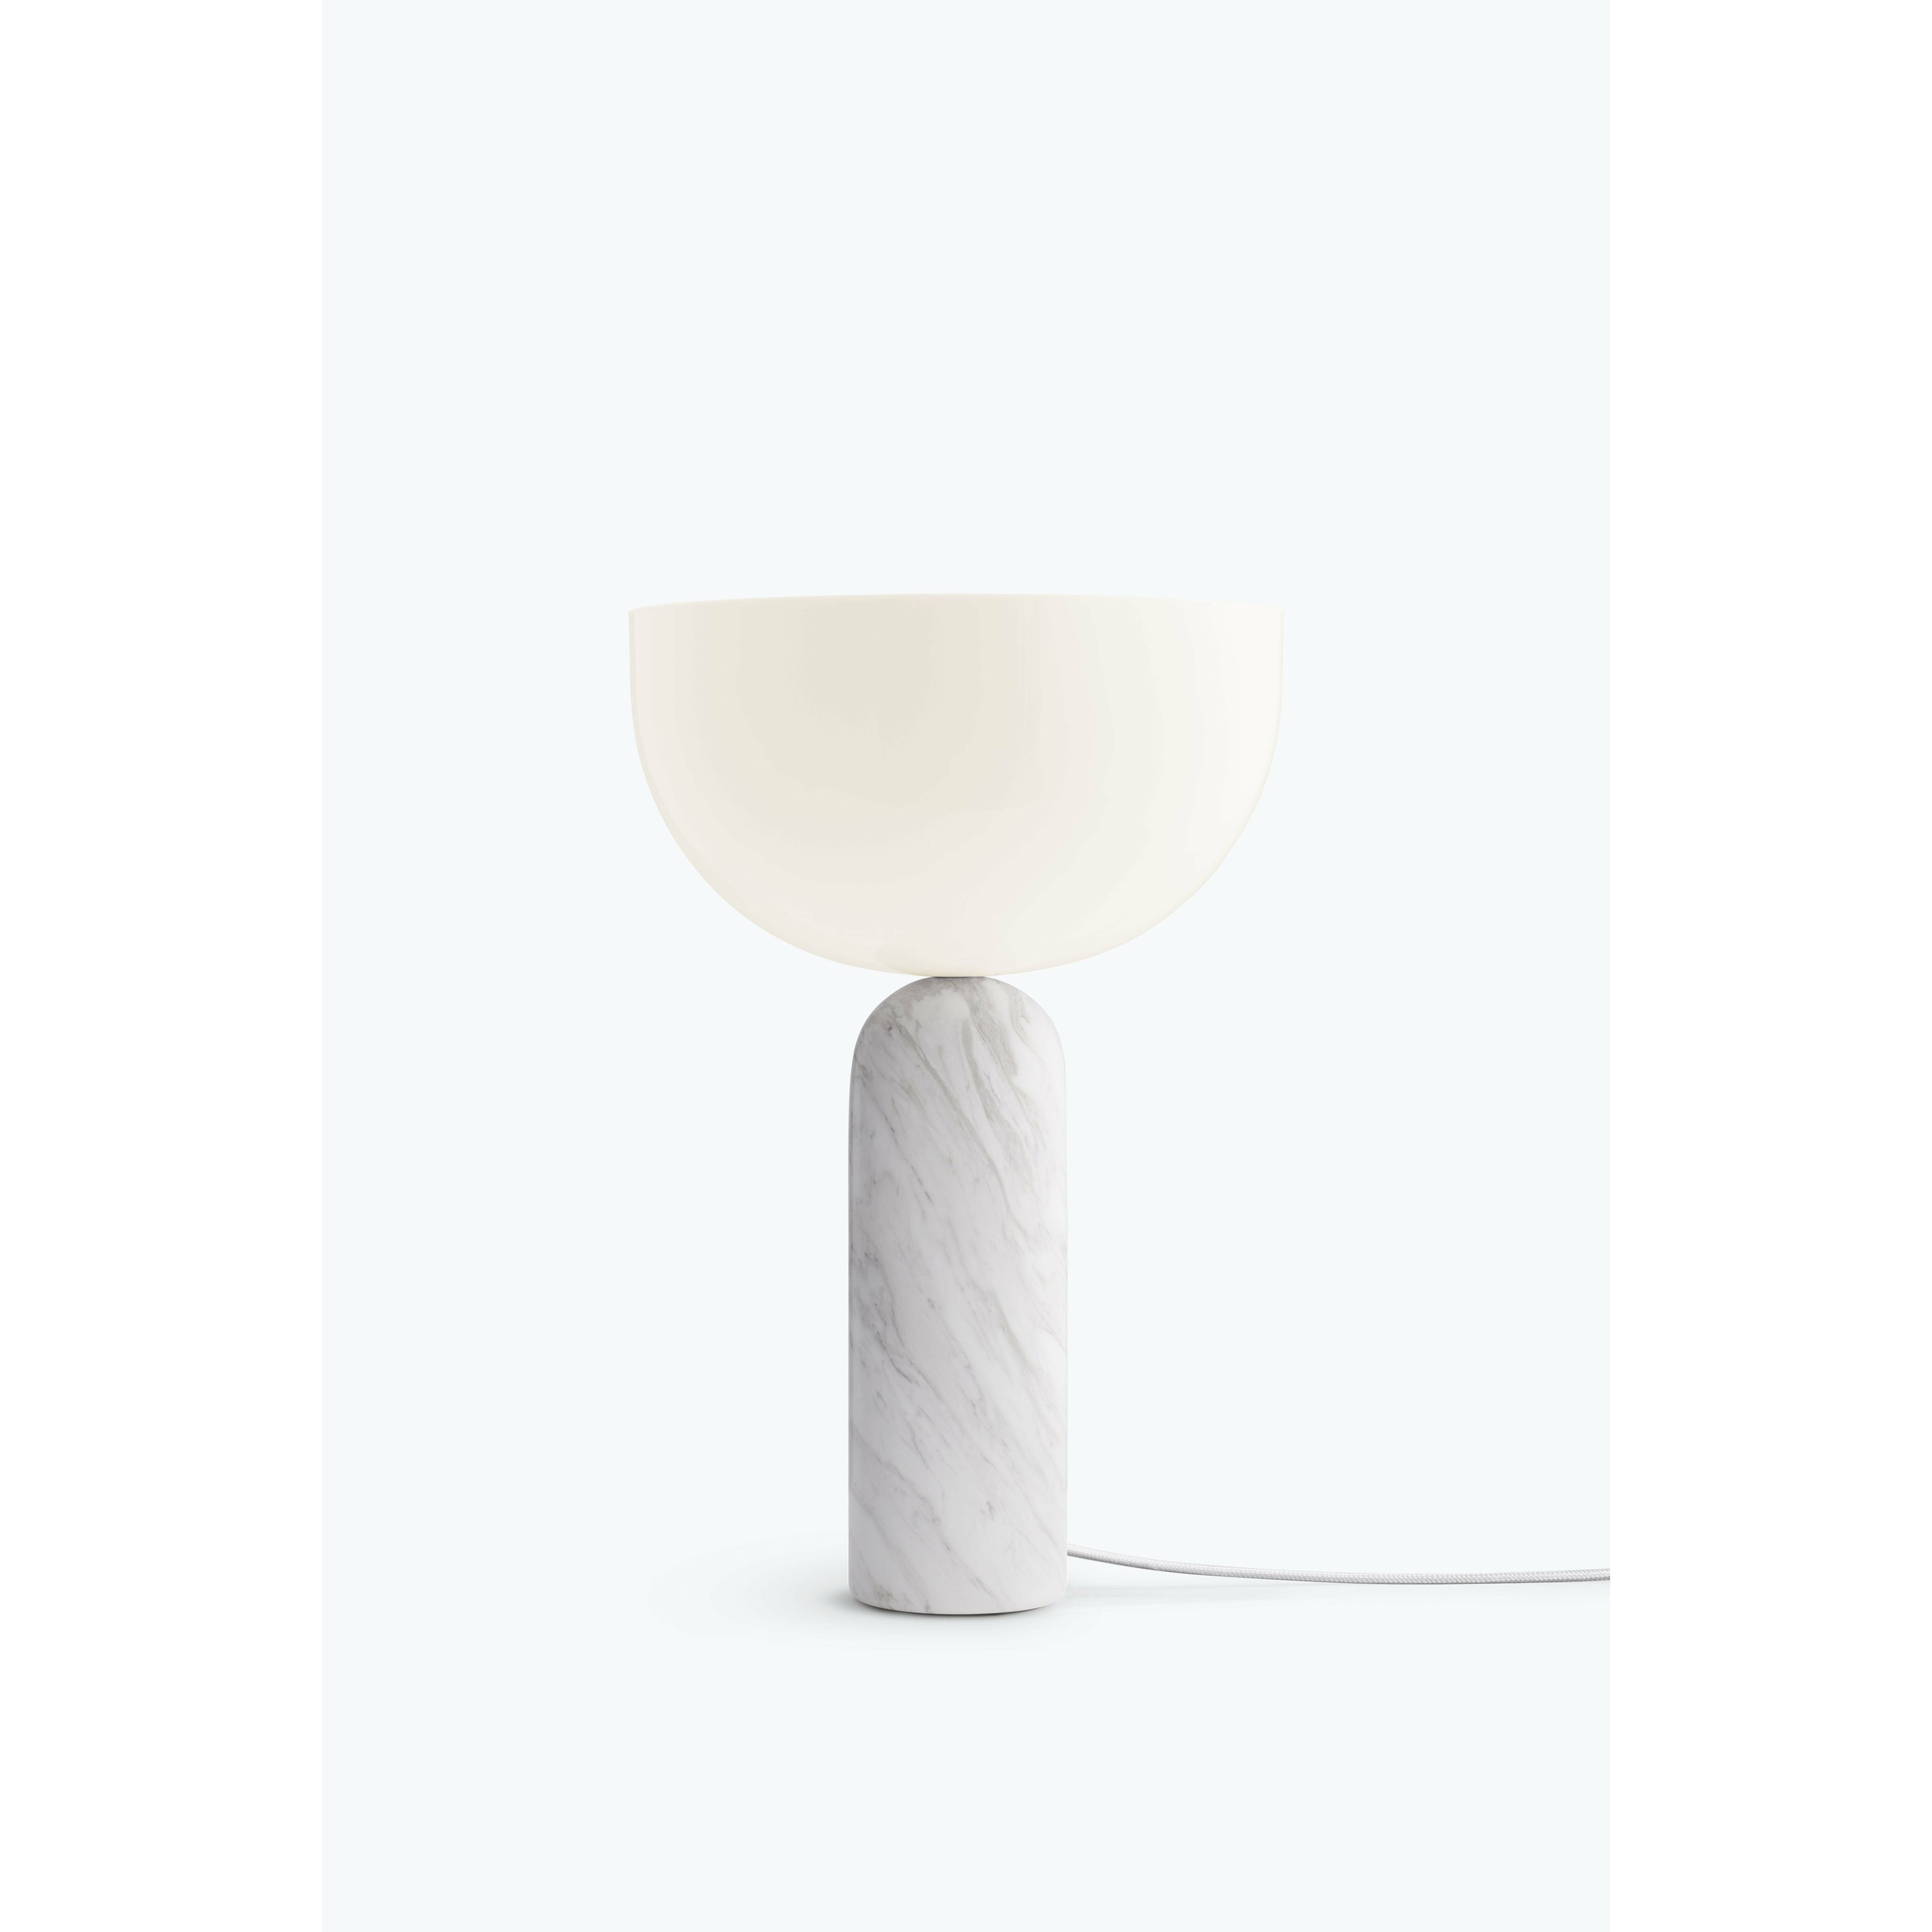 New Works Kizu tafellamp White Carrara marmer, groot